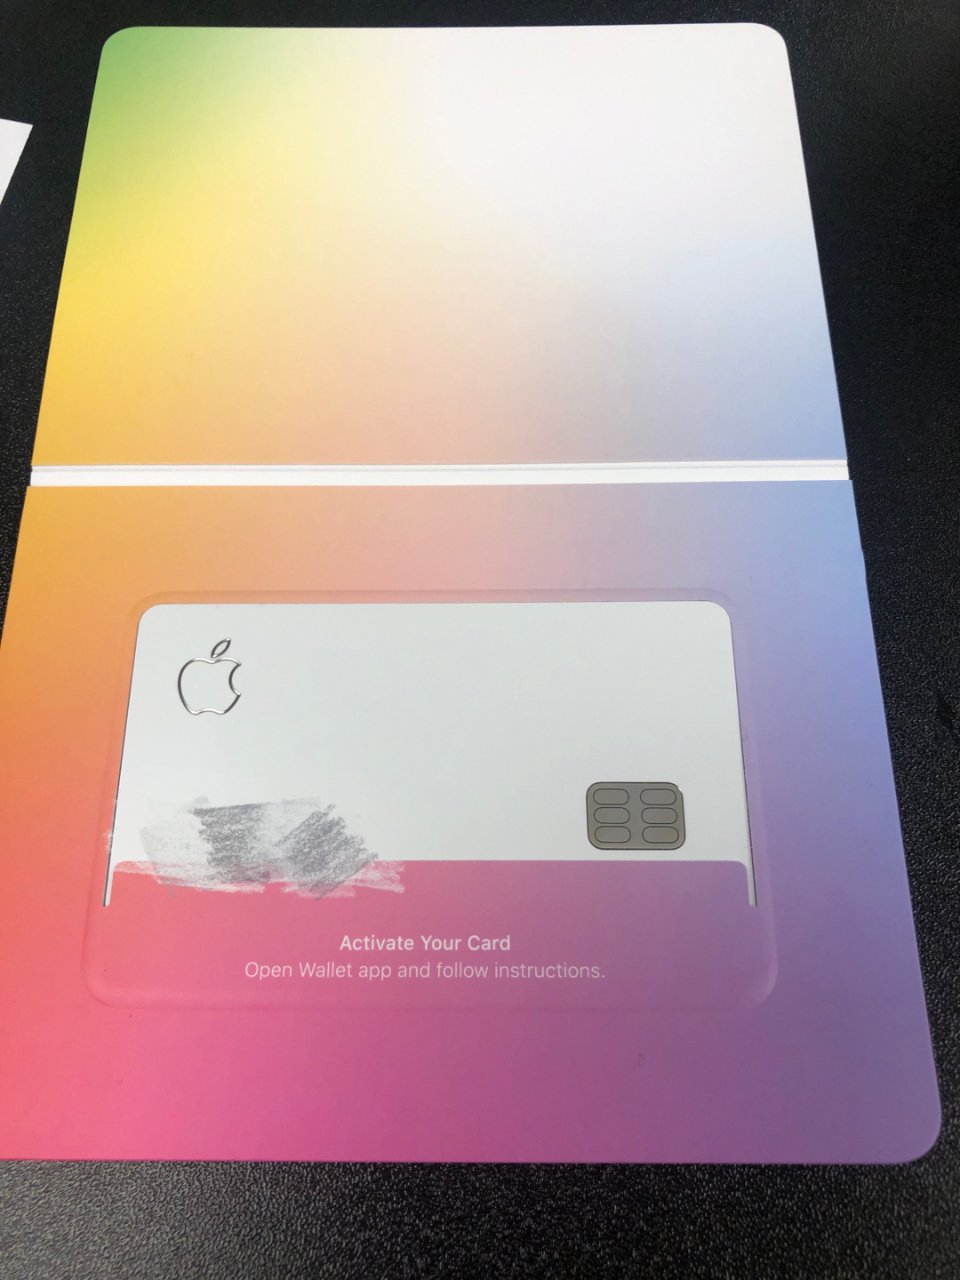 Apple卡到啦超级精致📱🥳准备买iPh...